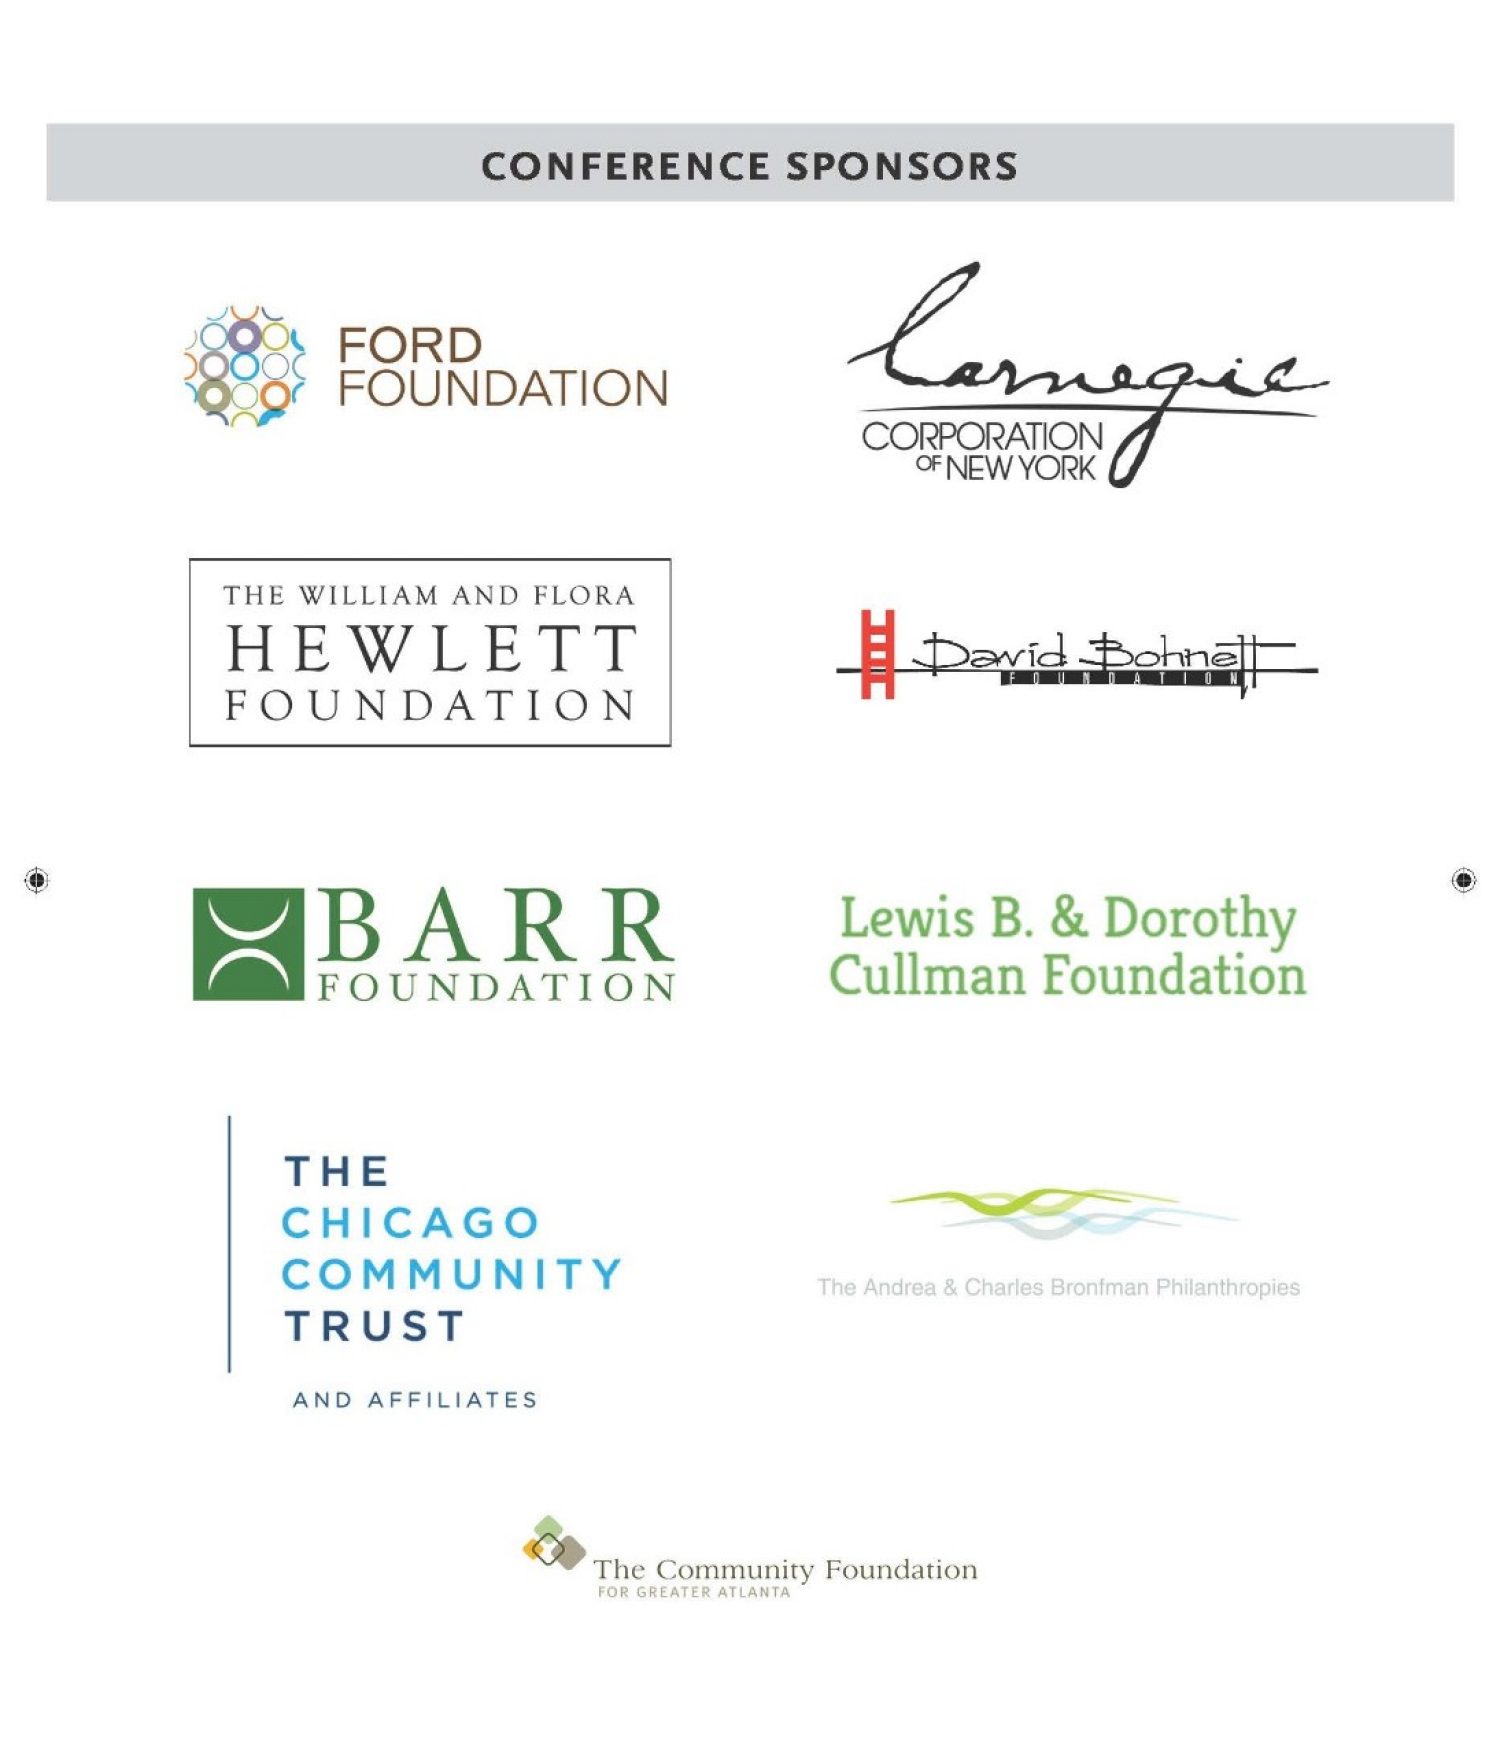 Conference sponsors: Ford Foundation, Barr Foundation, Rhode Island Foundation, Lewis B and Dorothy Cullman Foundation, William and Flora Hewlitt Foundation